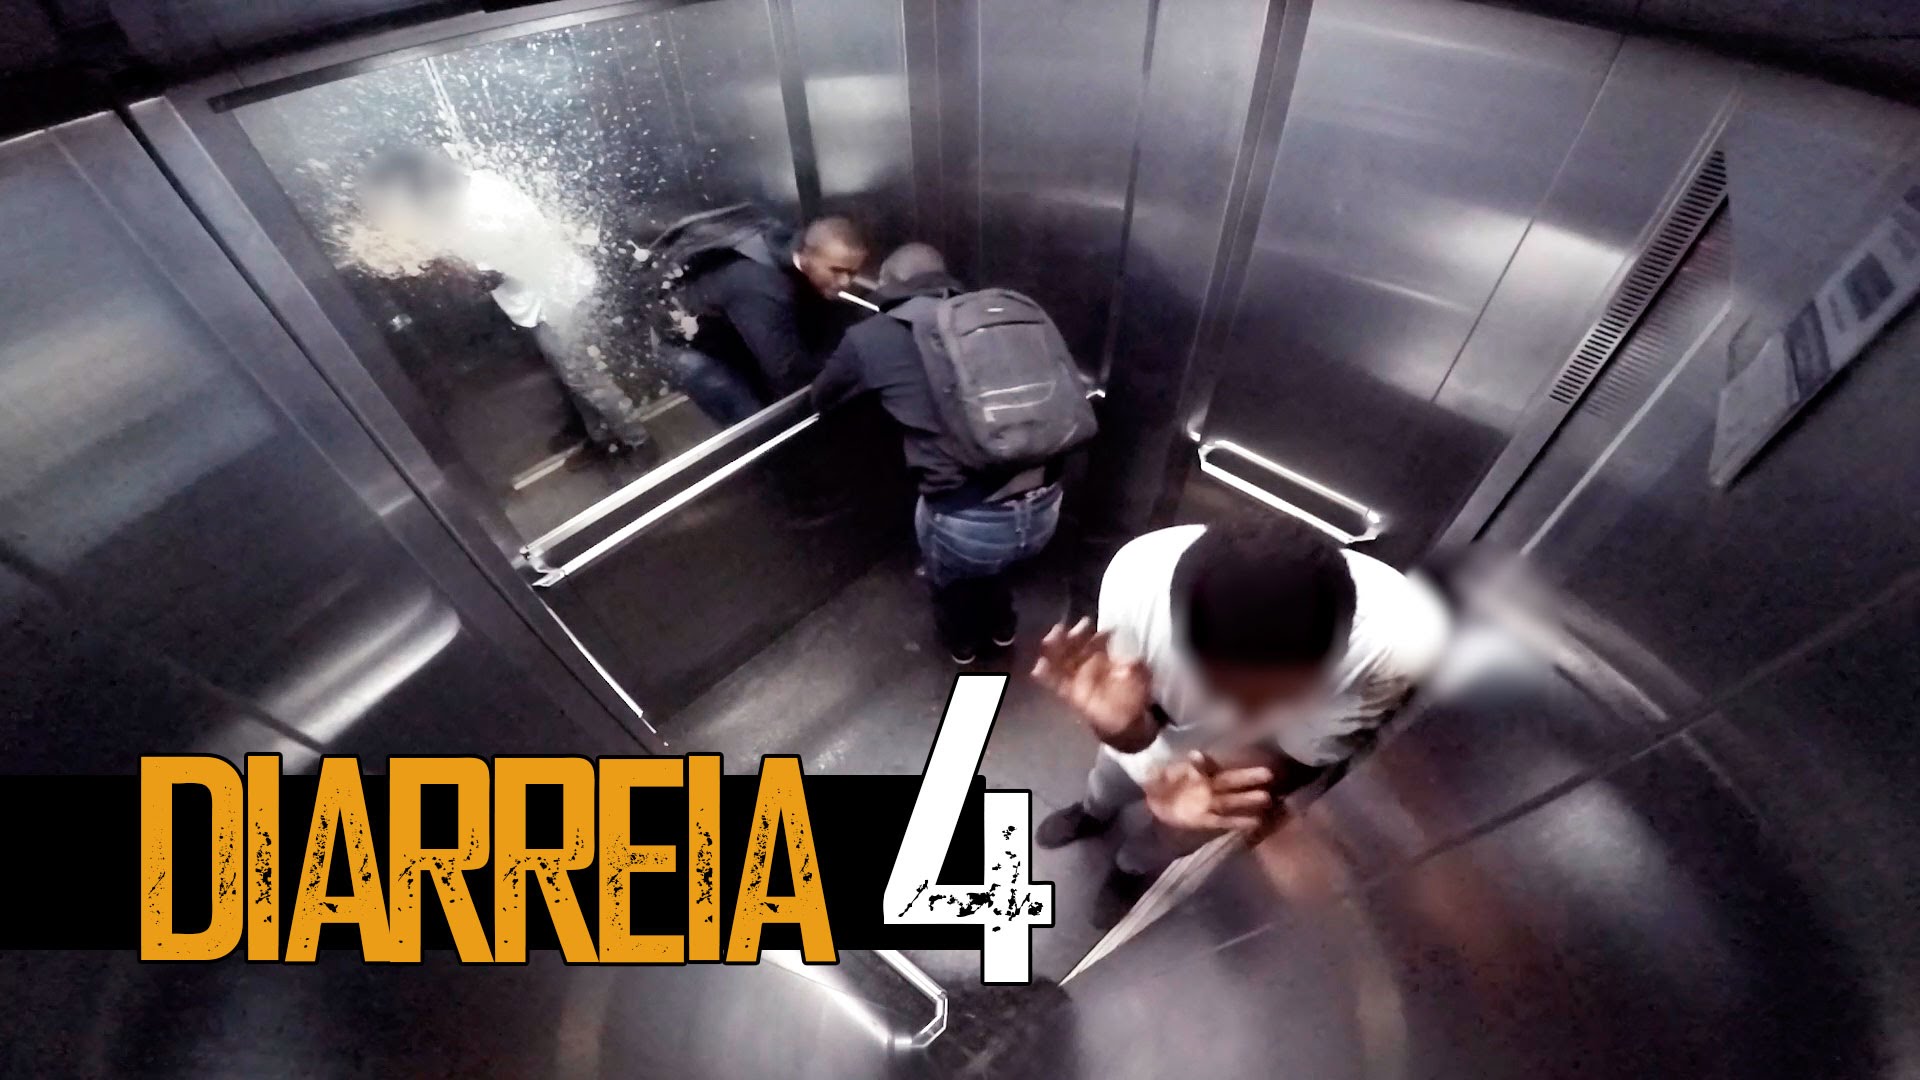 Explosive Diarrhea In Elevator Prank.